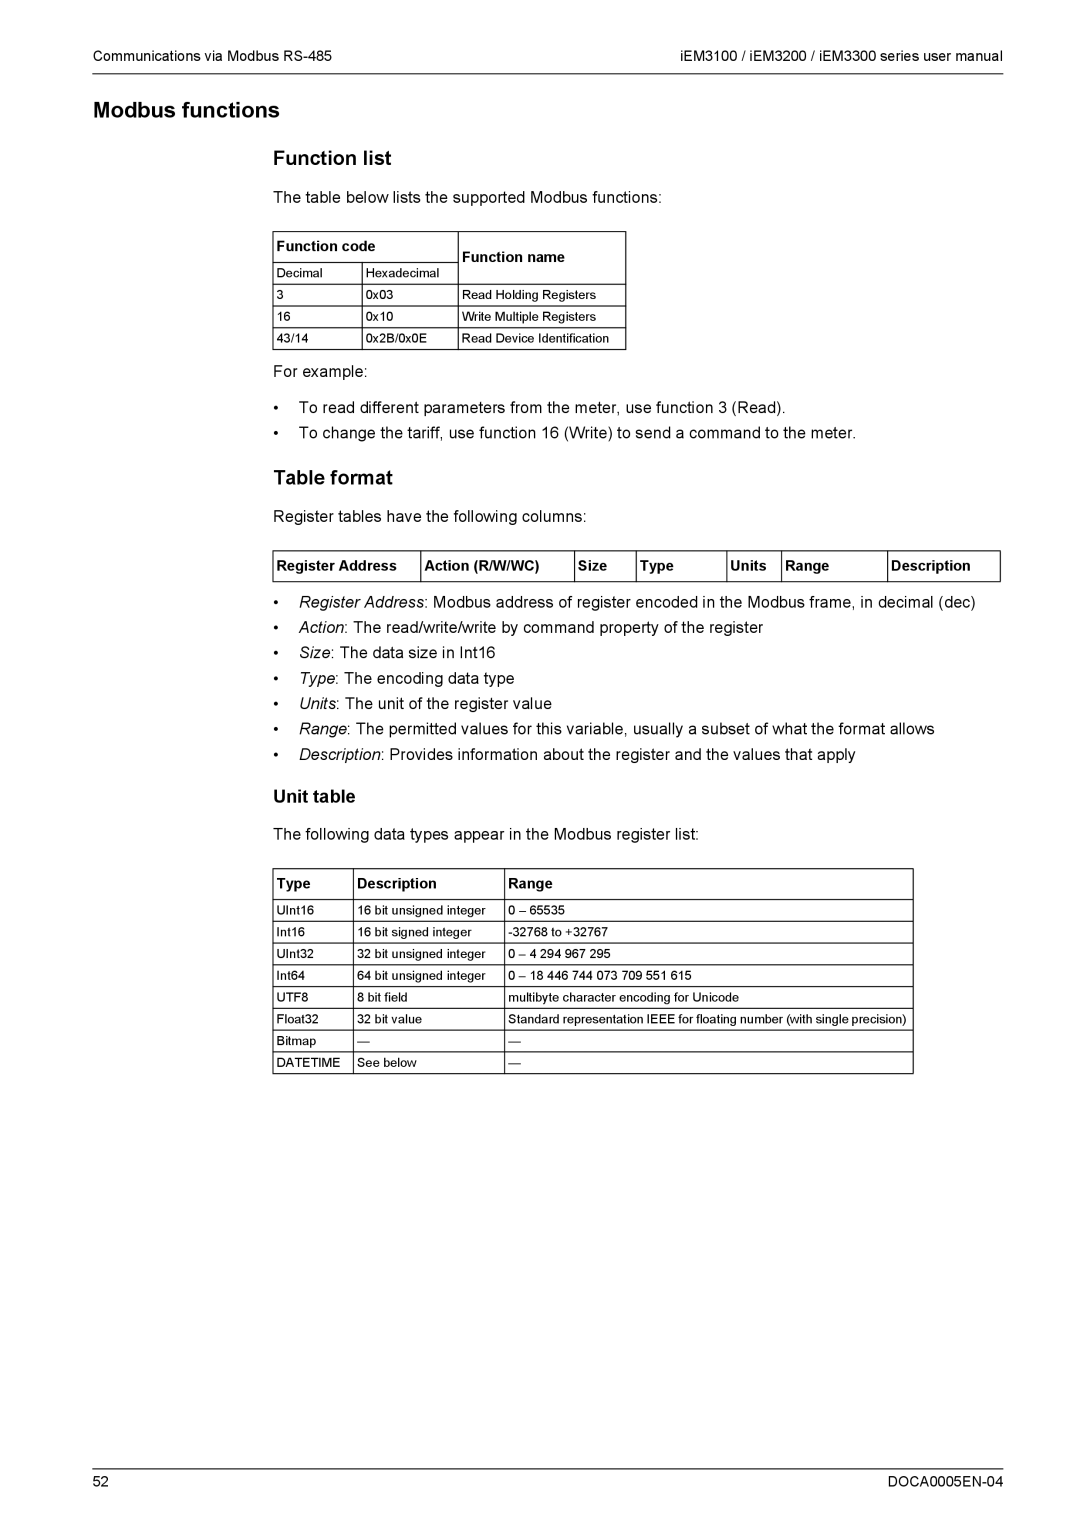 Schneider Electric iEM3200, iEM3300, iEM3100 user manual Modbus functions, Function list, Table format, Unit table 